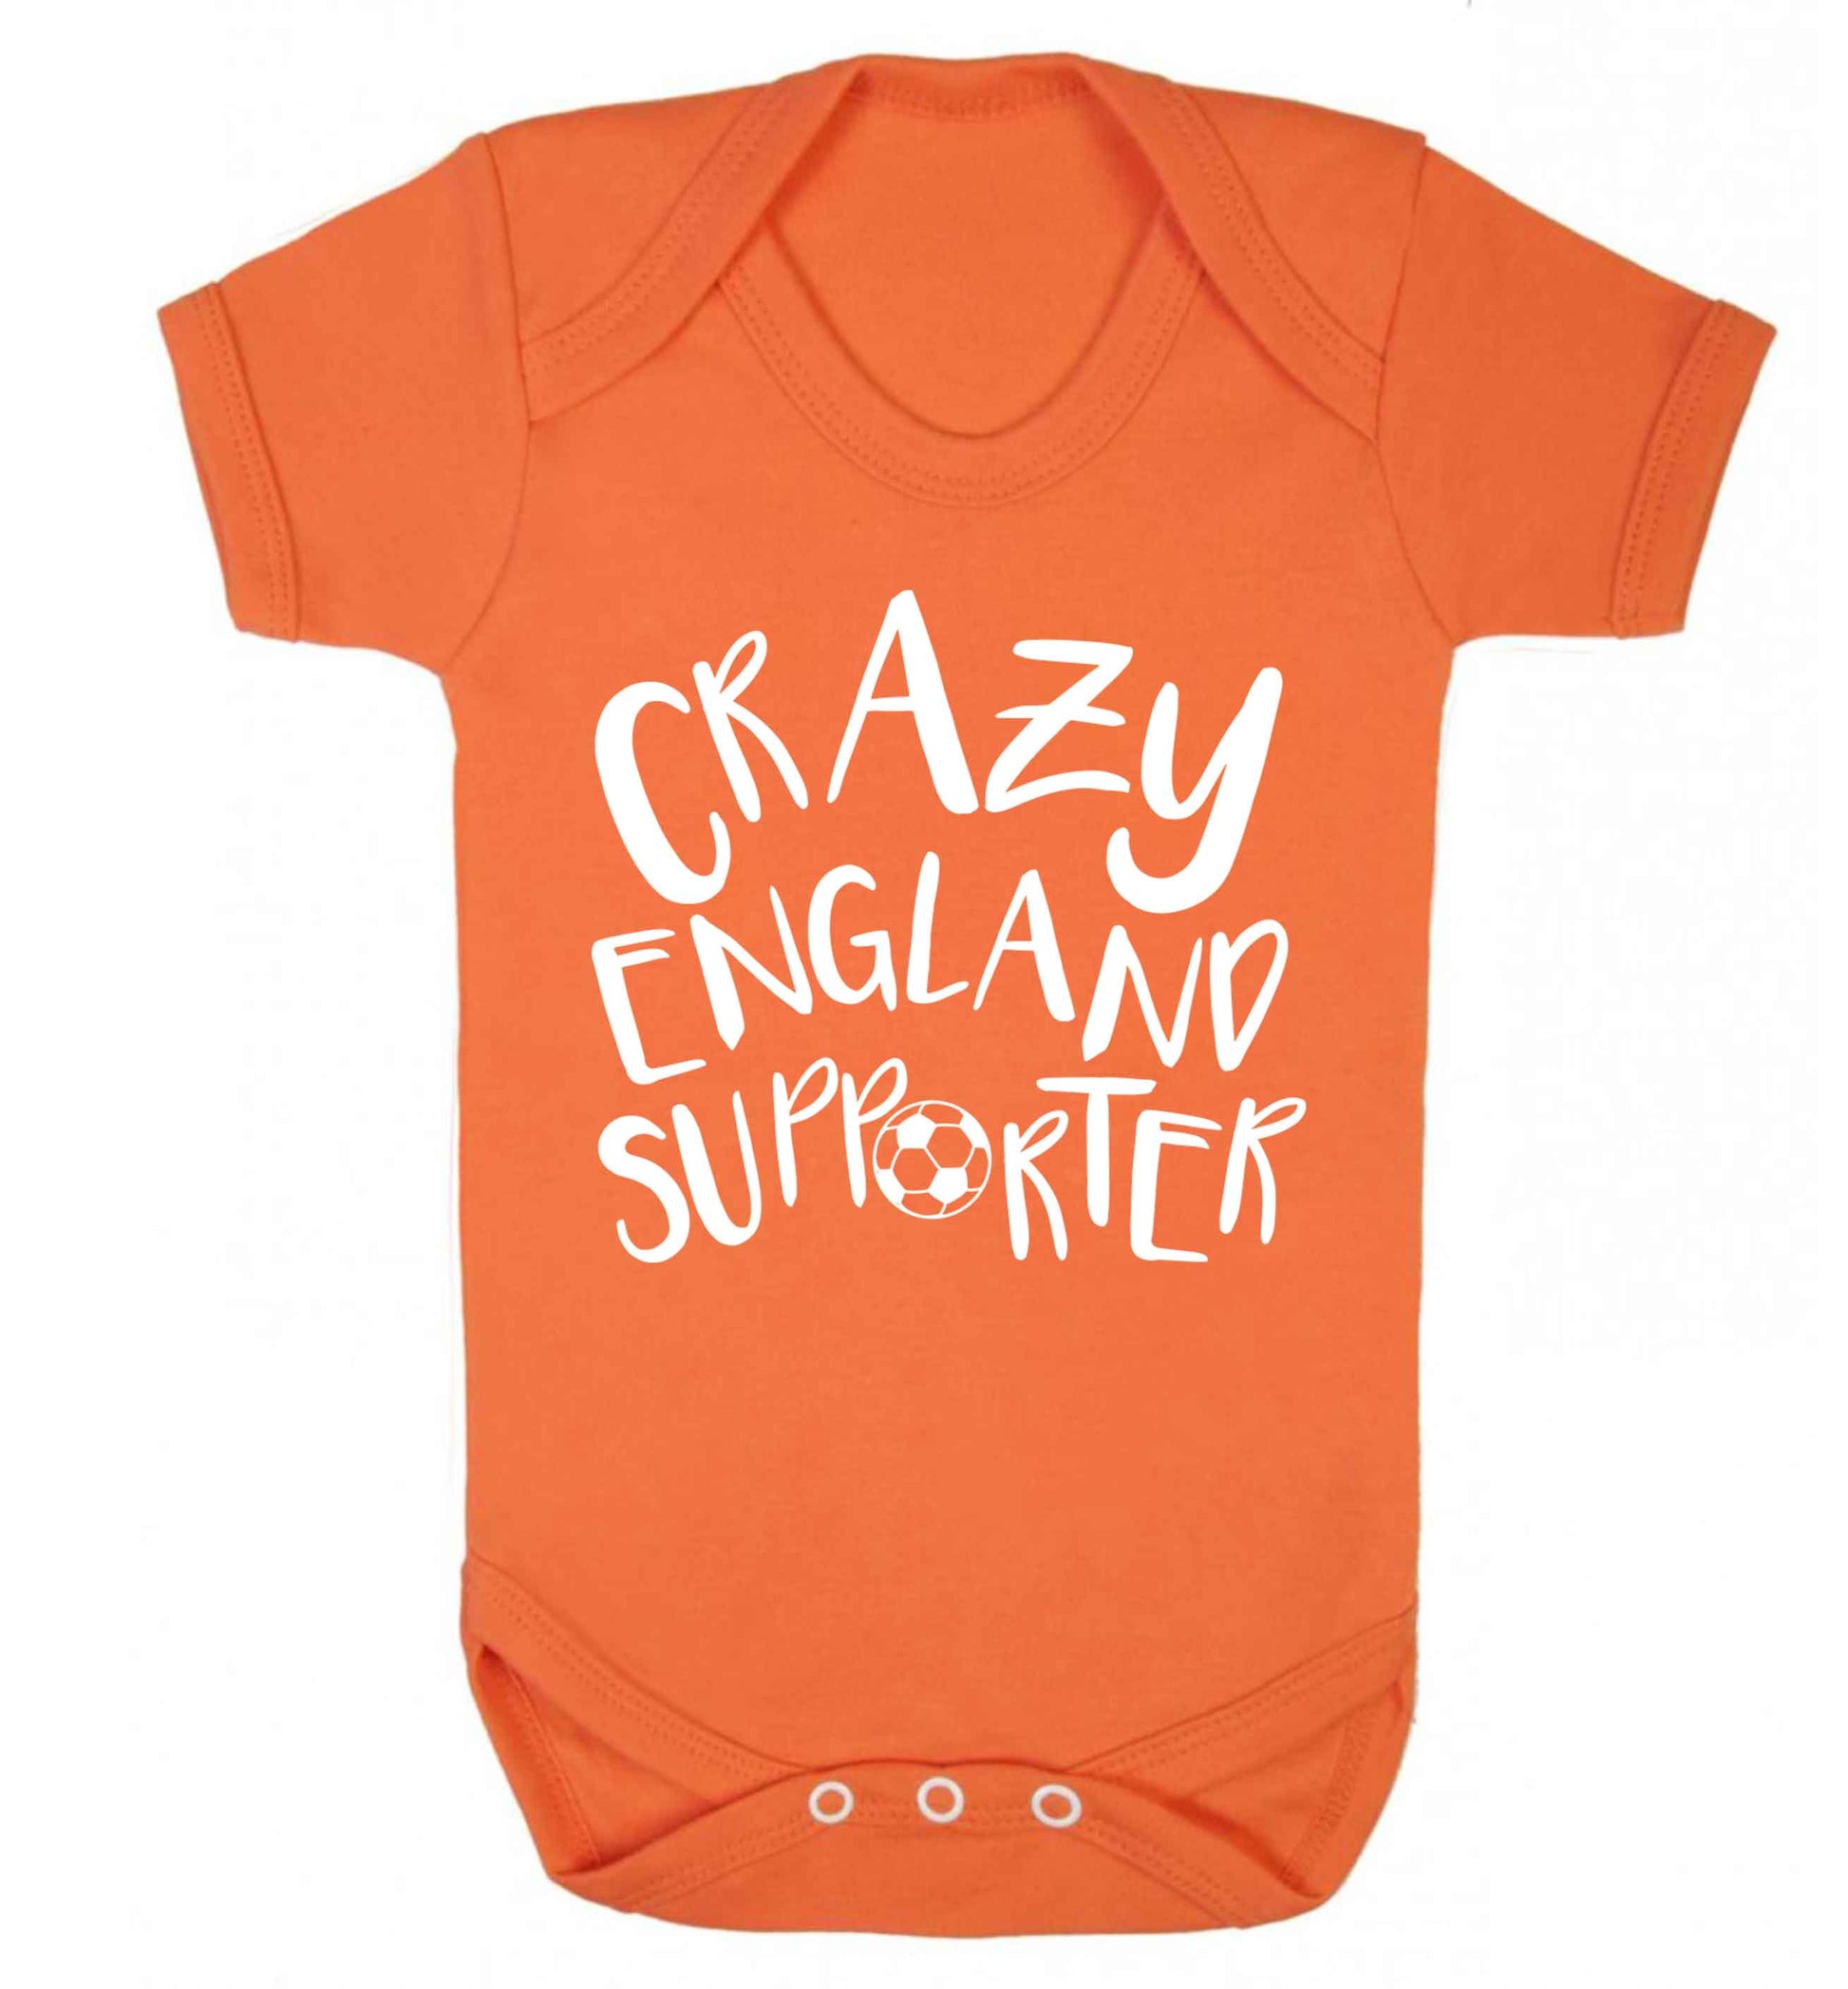 Crazy England supporter Baby Vest orange 18-24 months